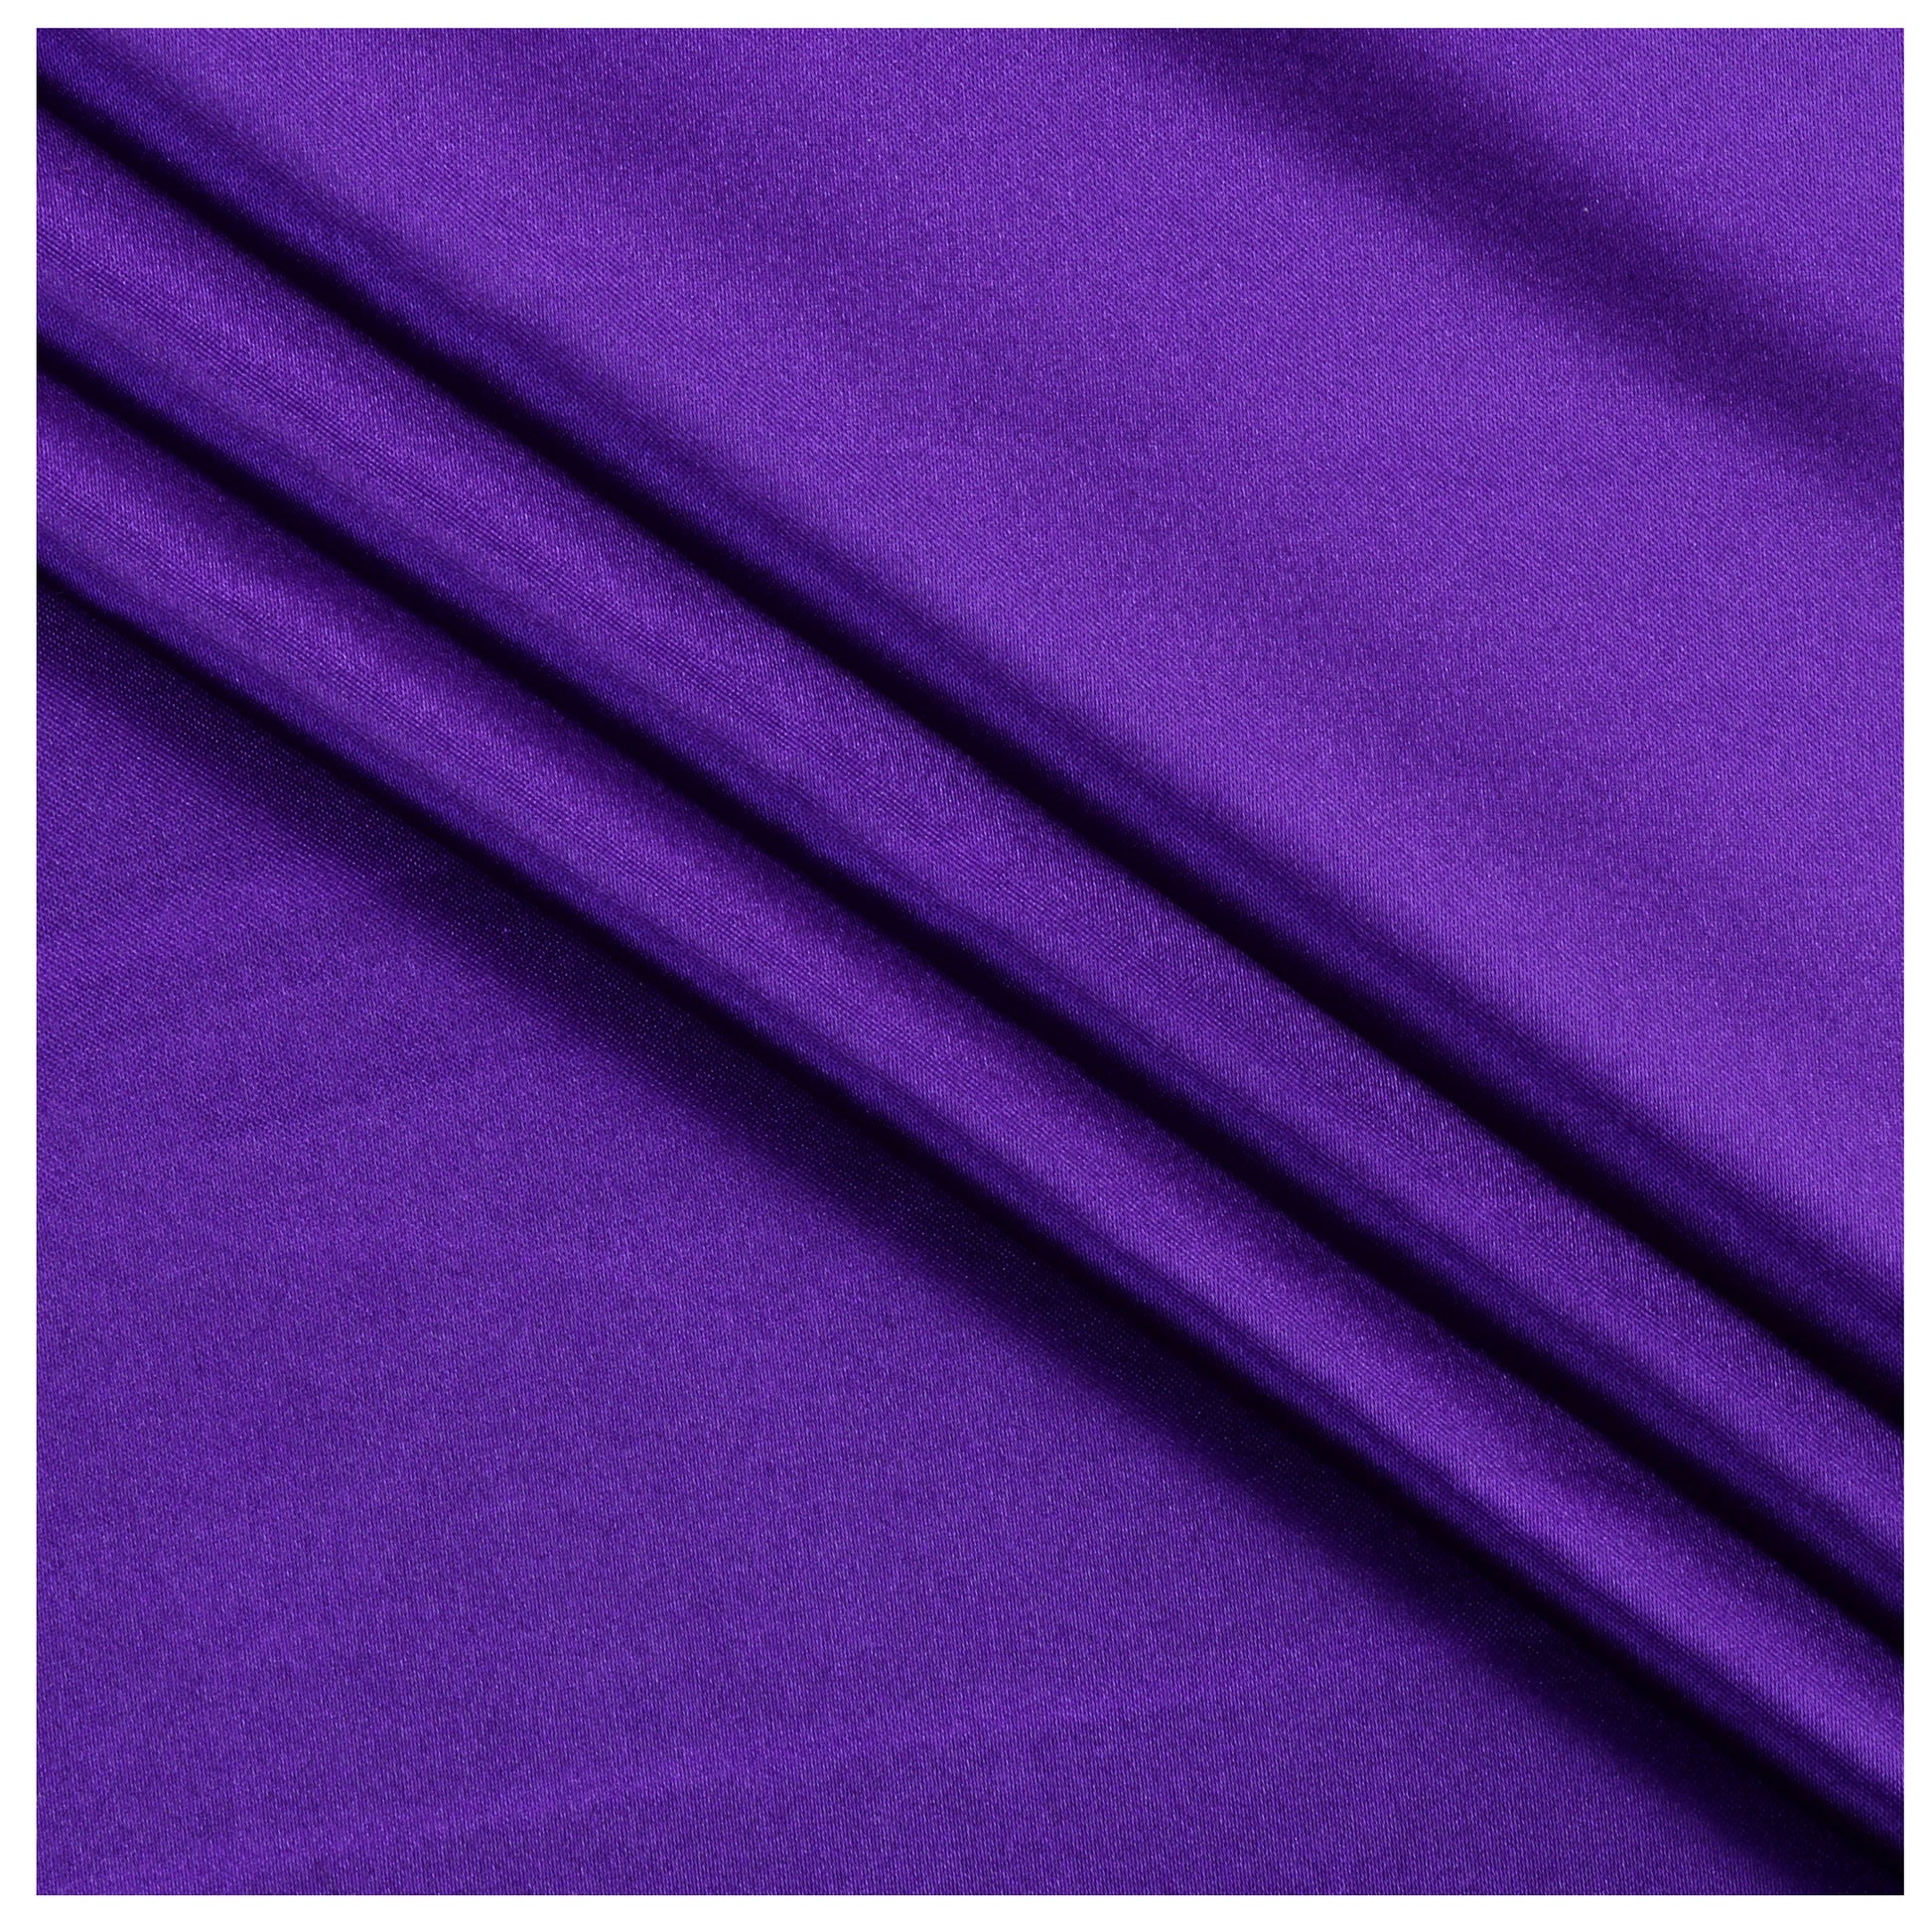 Cadbury Purple,354b76aa-9c01-4160-8ec1-05360f53b3e8